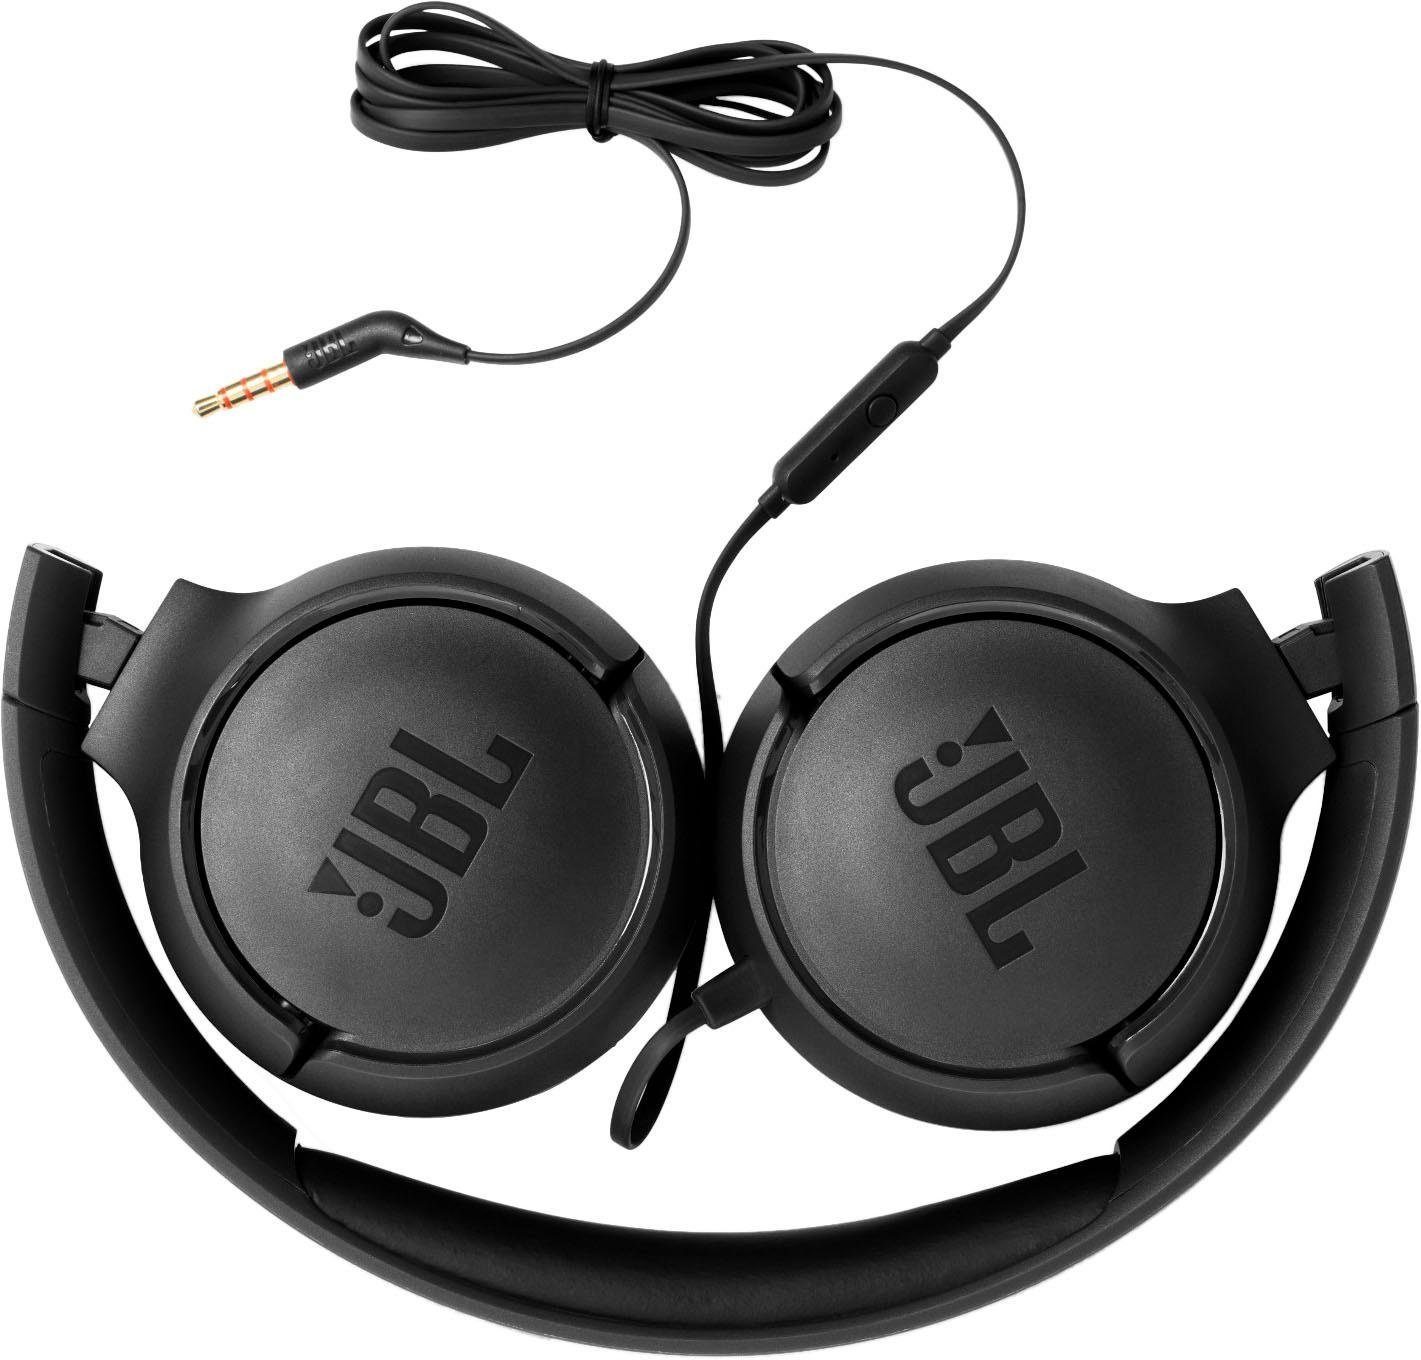 Google JBL TUNE 500 (Sprachsteuerung, On-Ear-Kopfhörer Assistant, Siri) schwarz